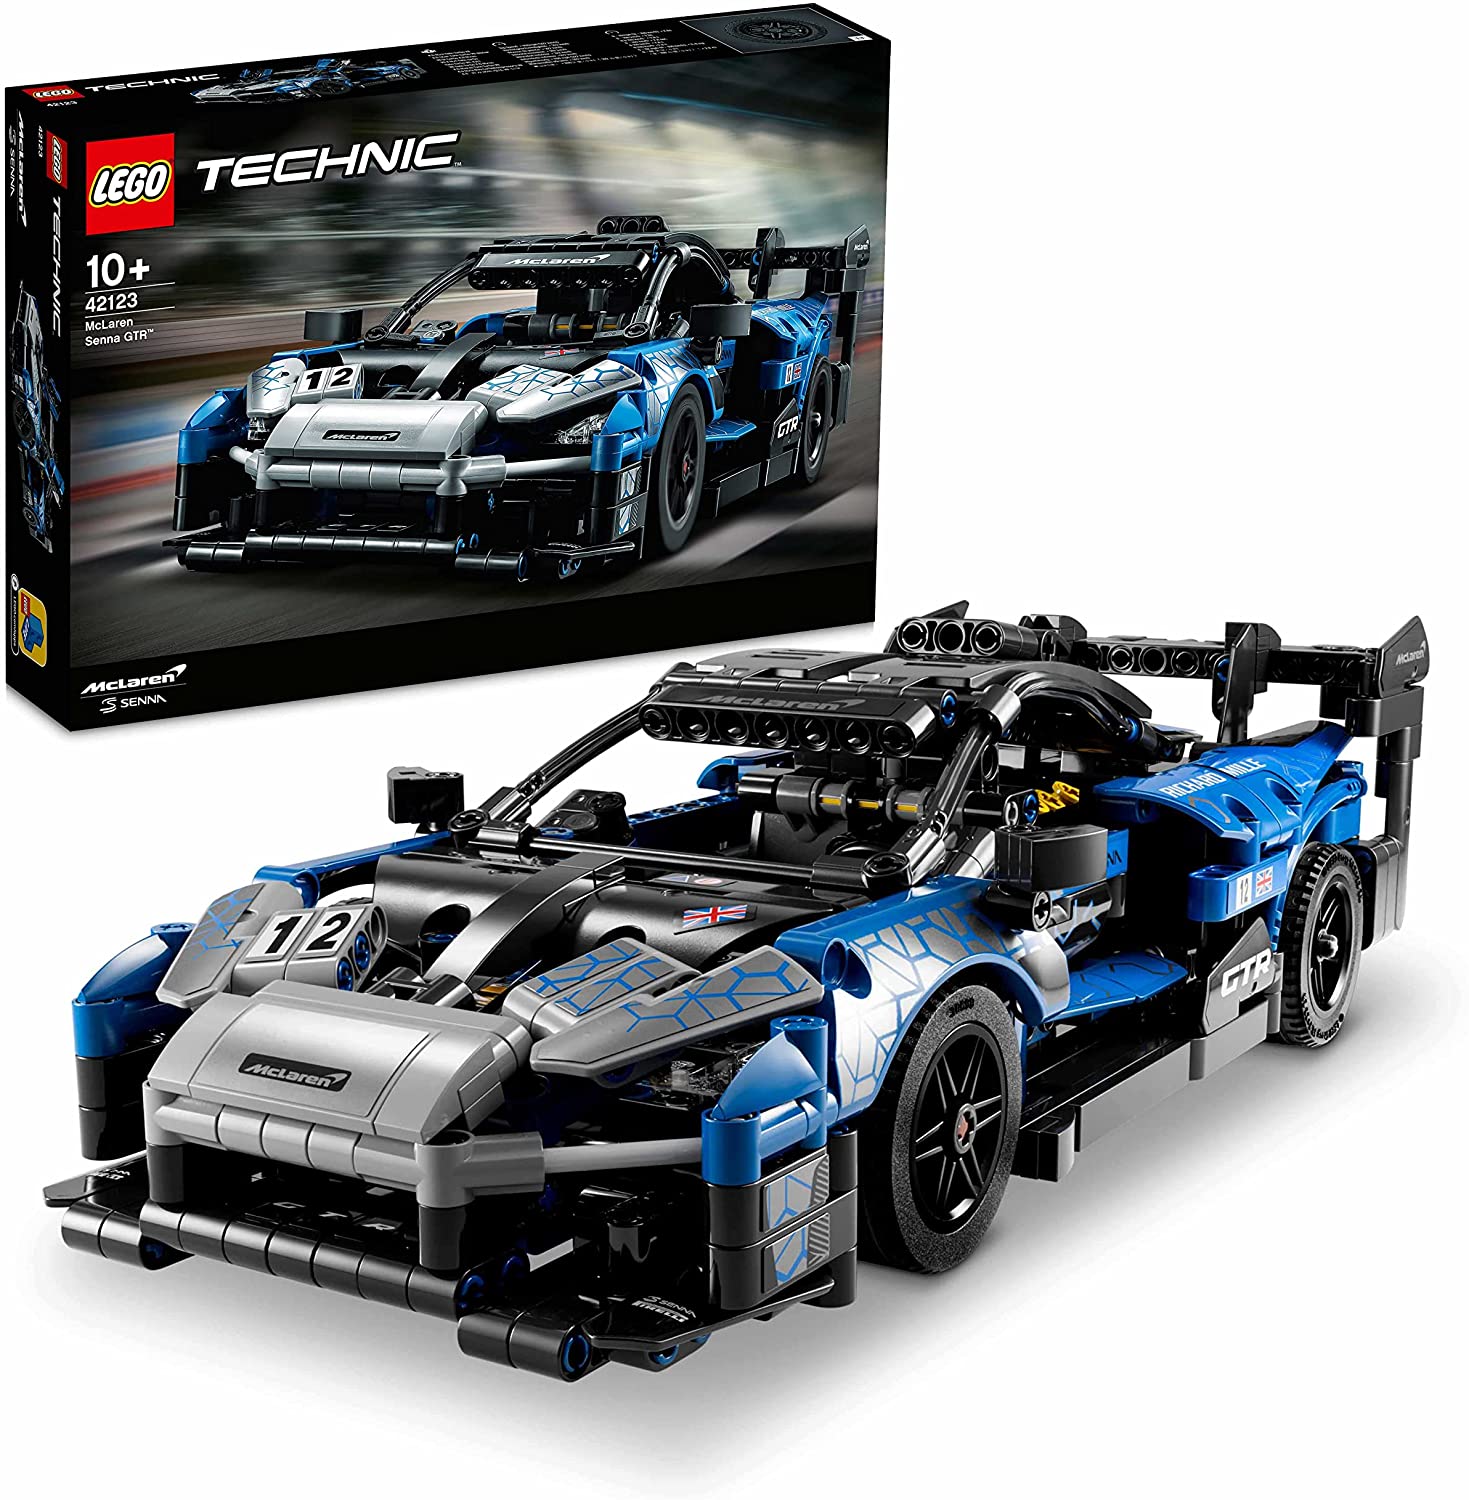 Lego 42123 Technic McLaren Senna GTR Racing Car Vehicle Kit Collectable Mod